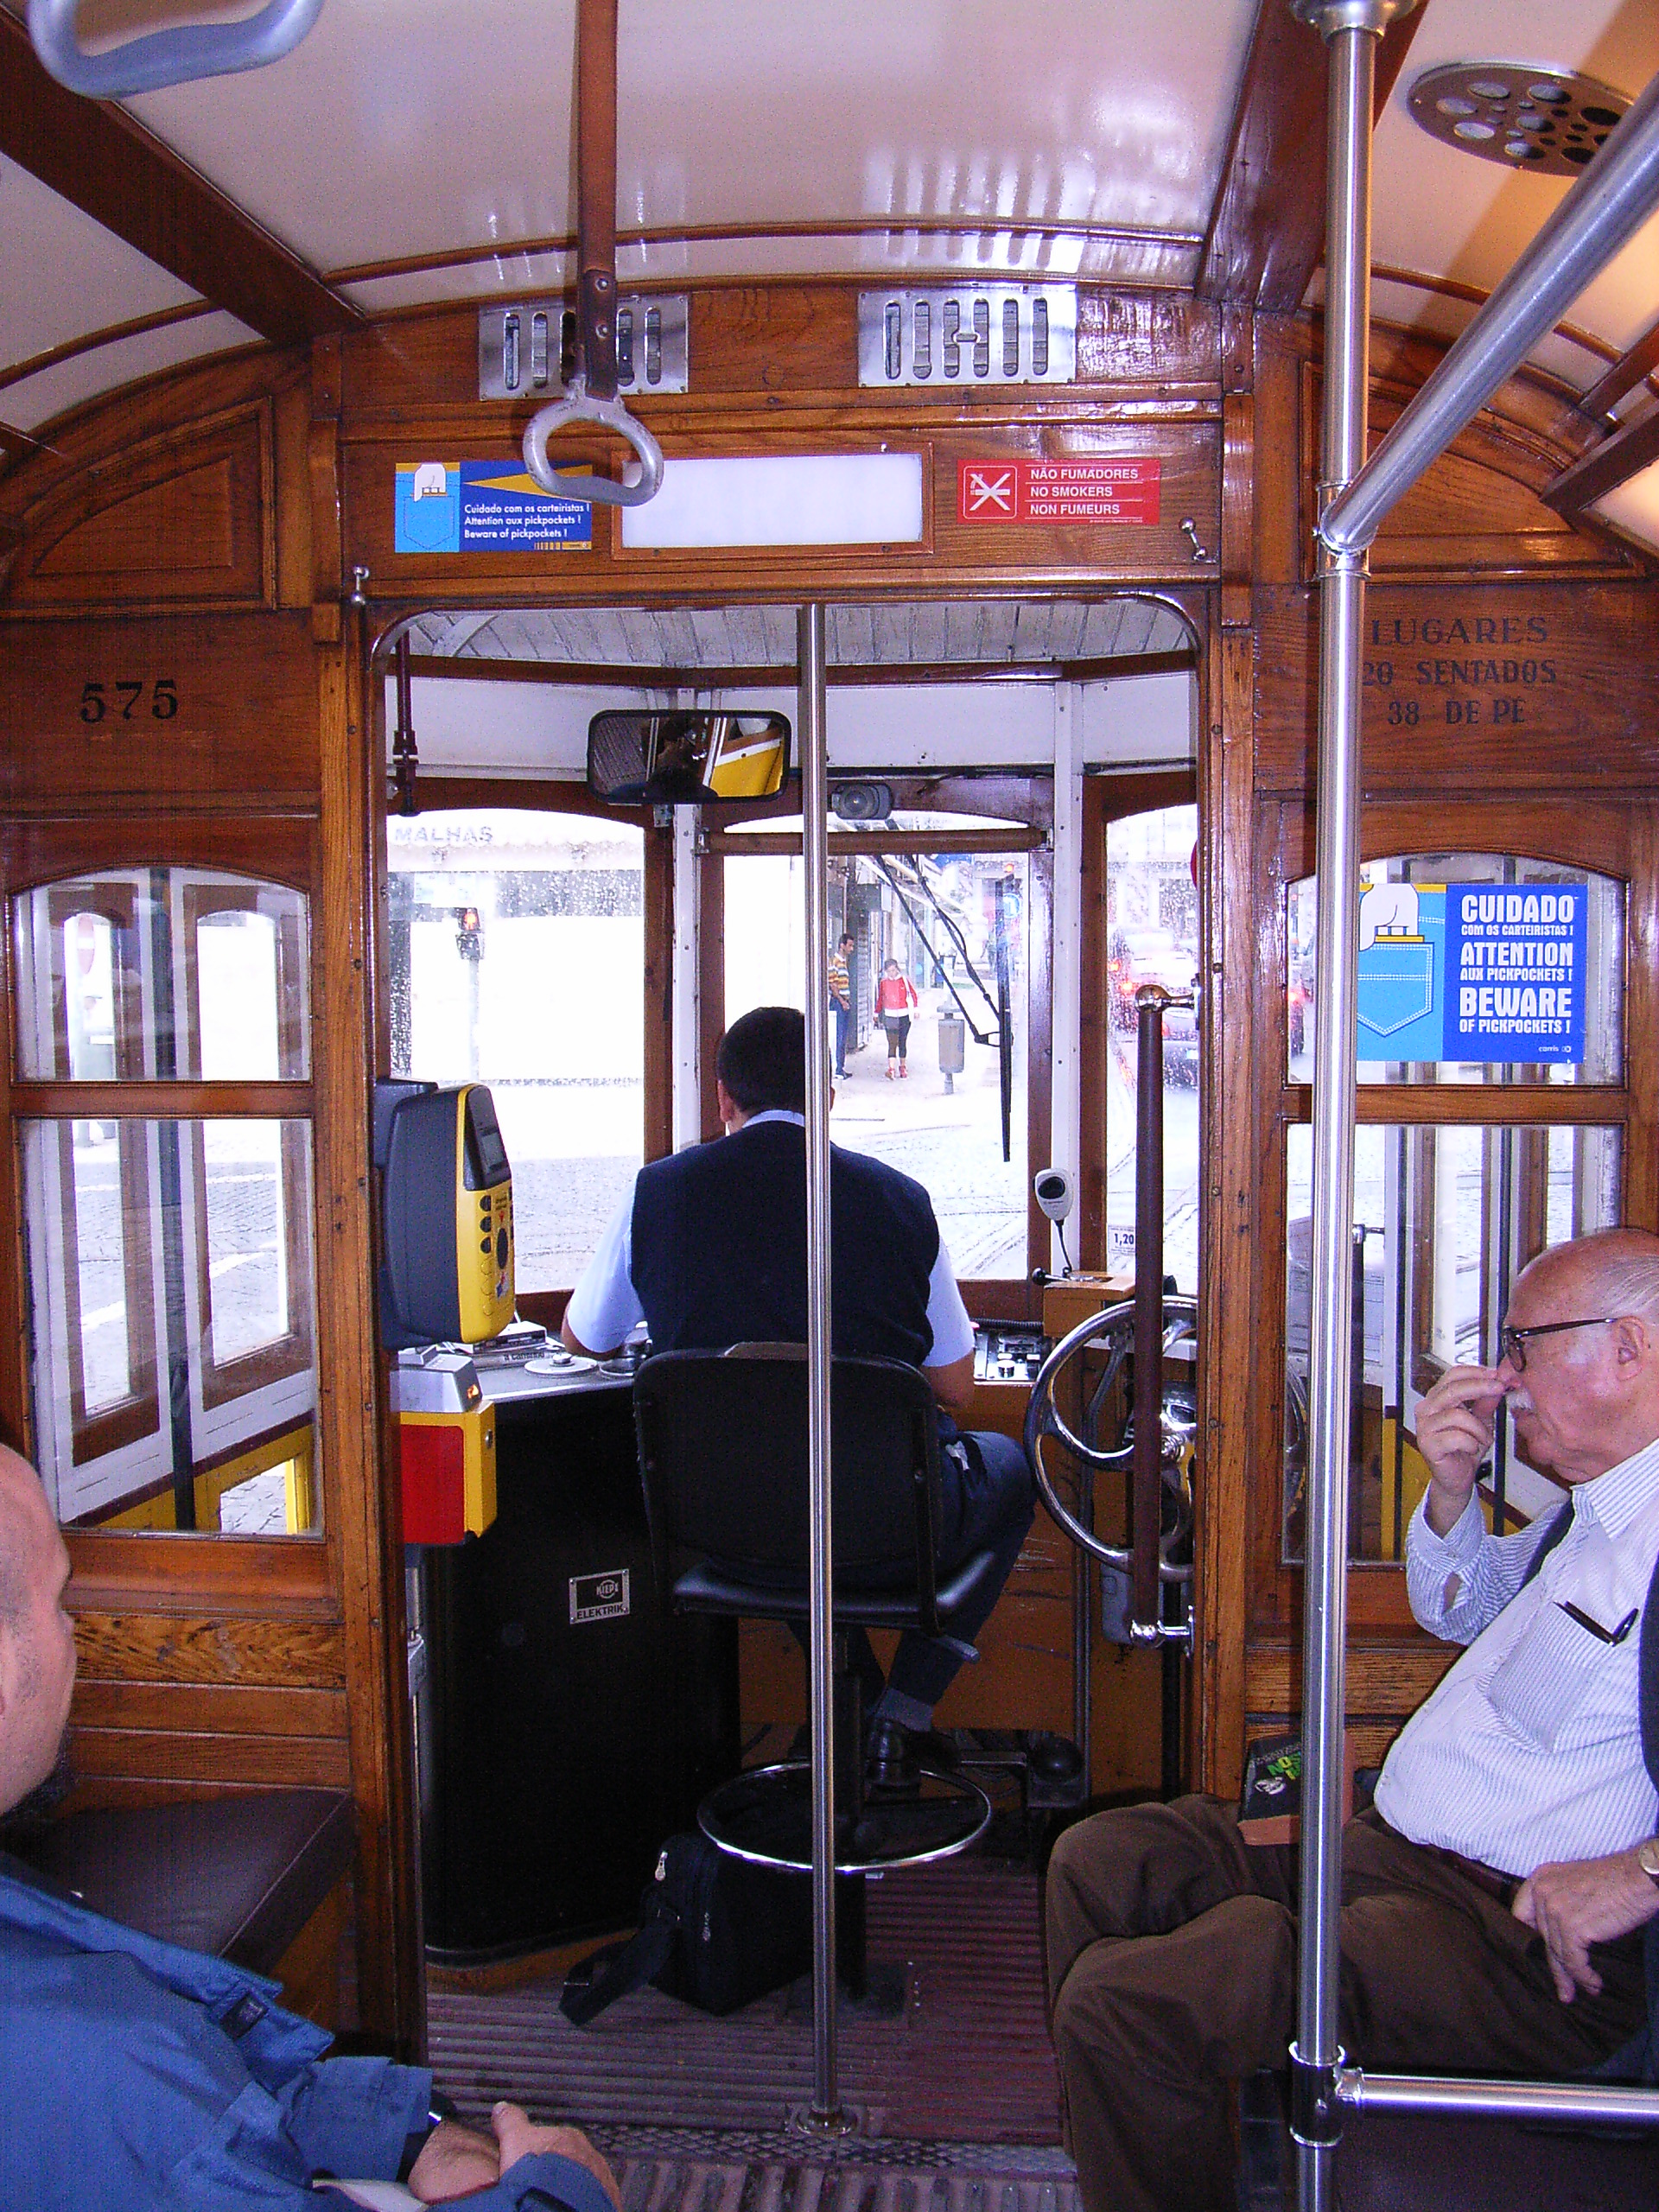 File:Tram interior.jpg - Wikimedia Commons